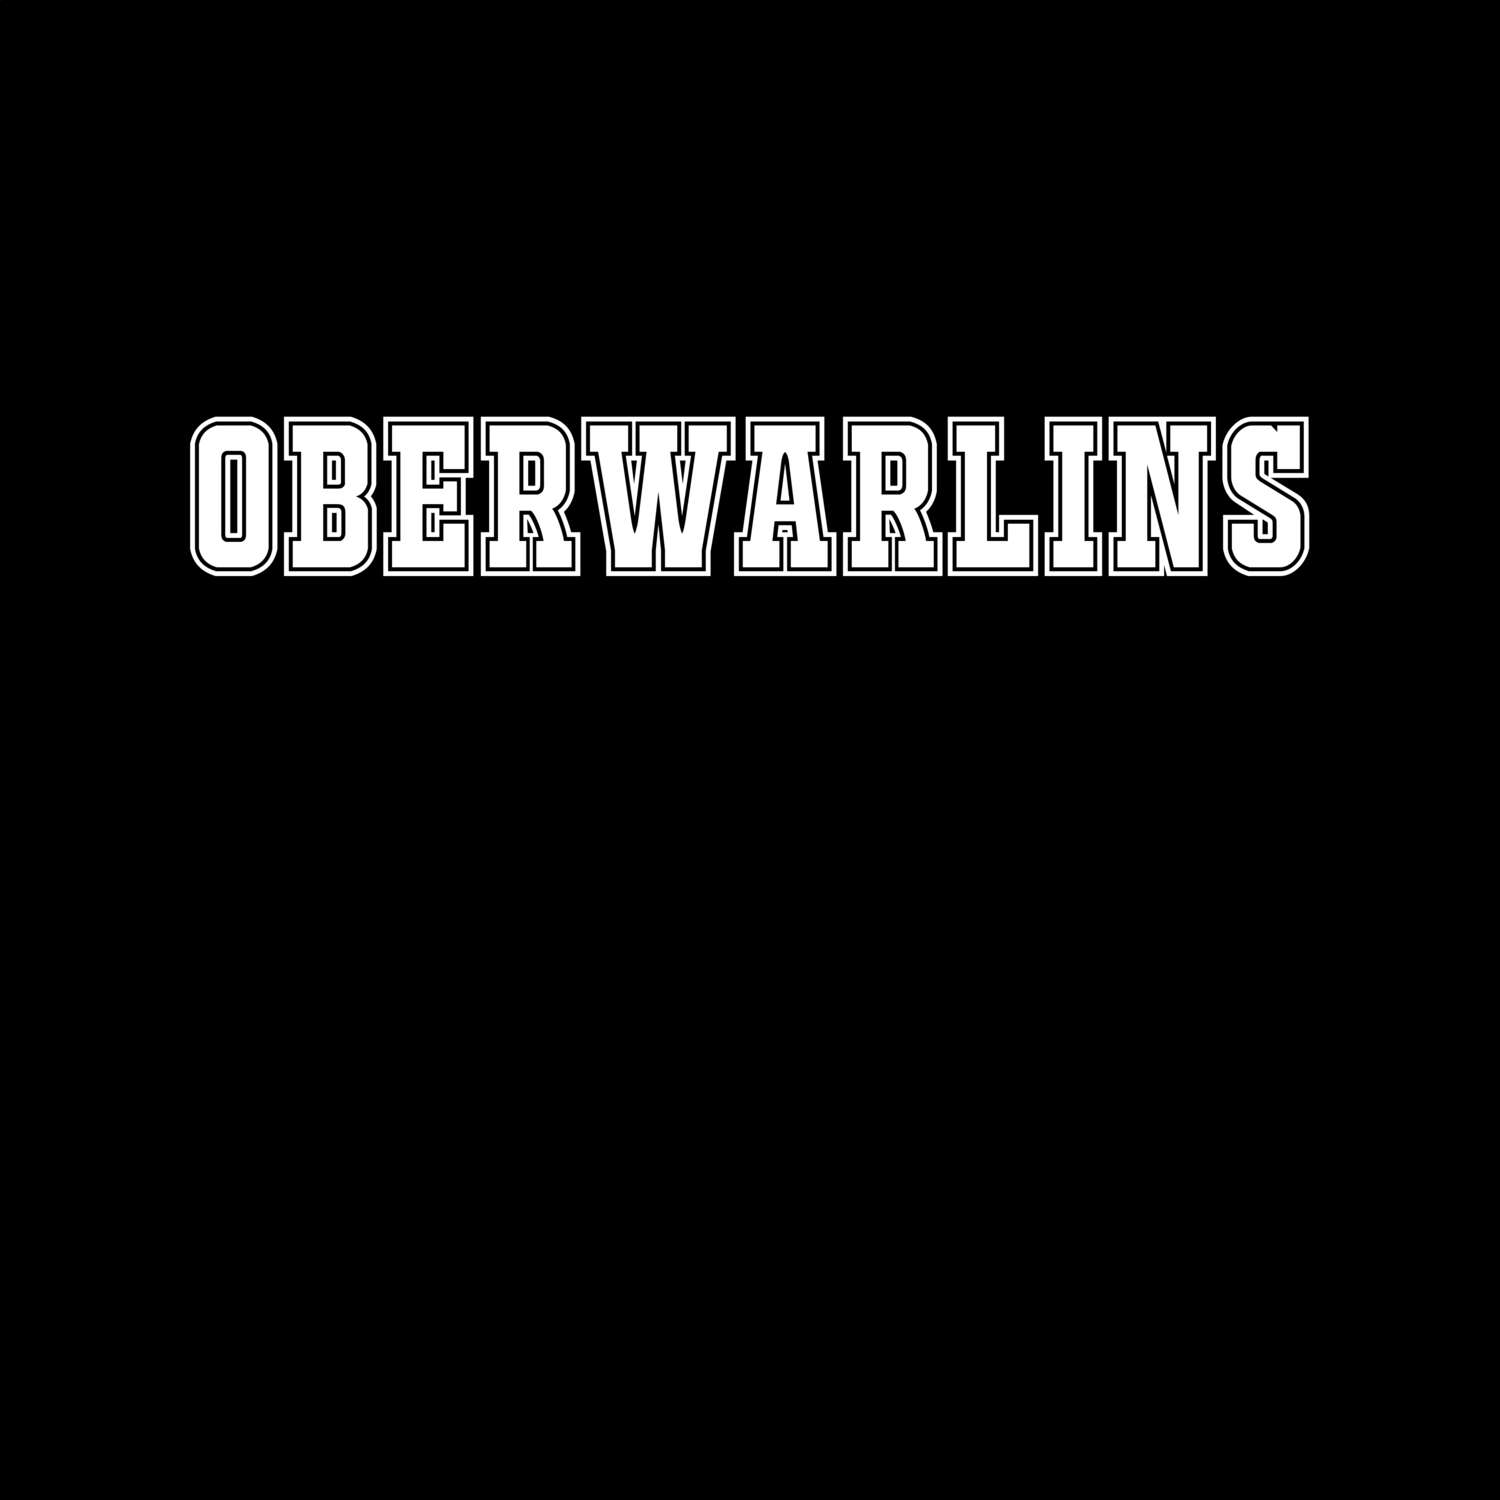 Oberwarlins T-Shirt »Classic«